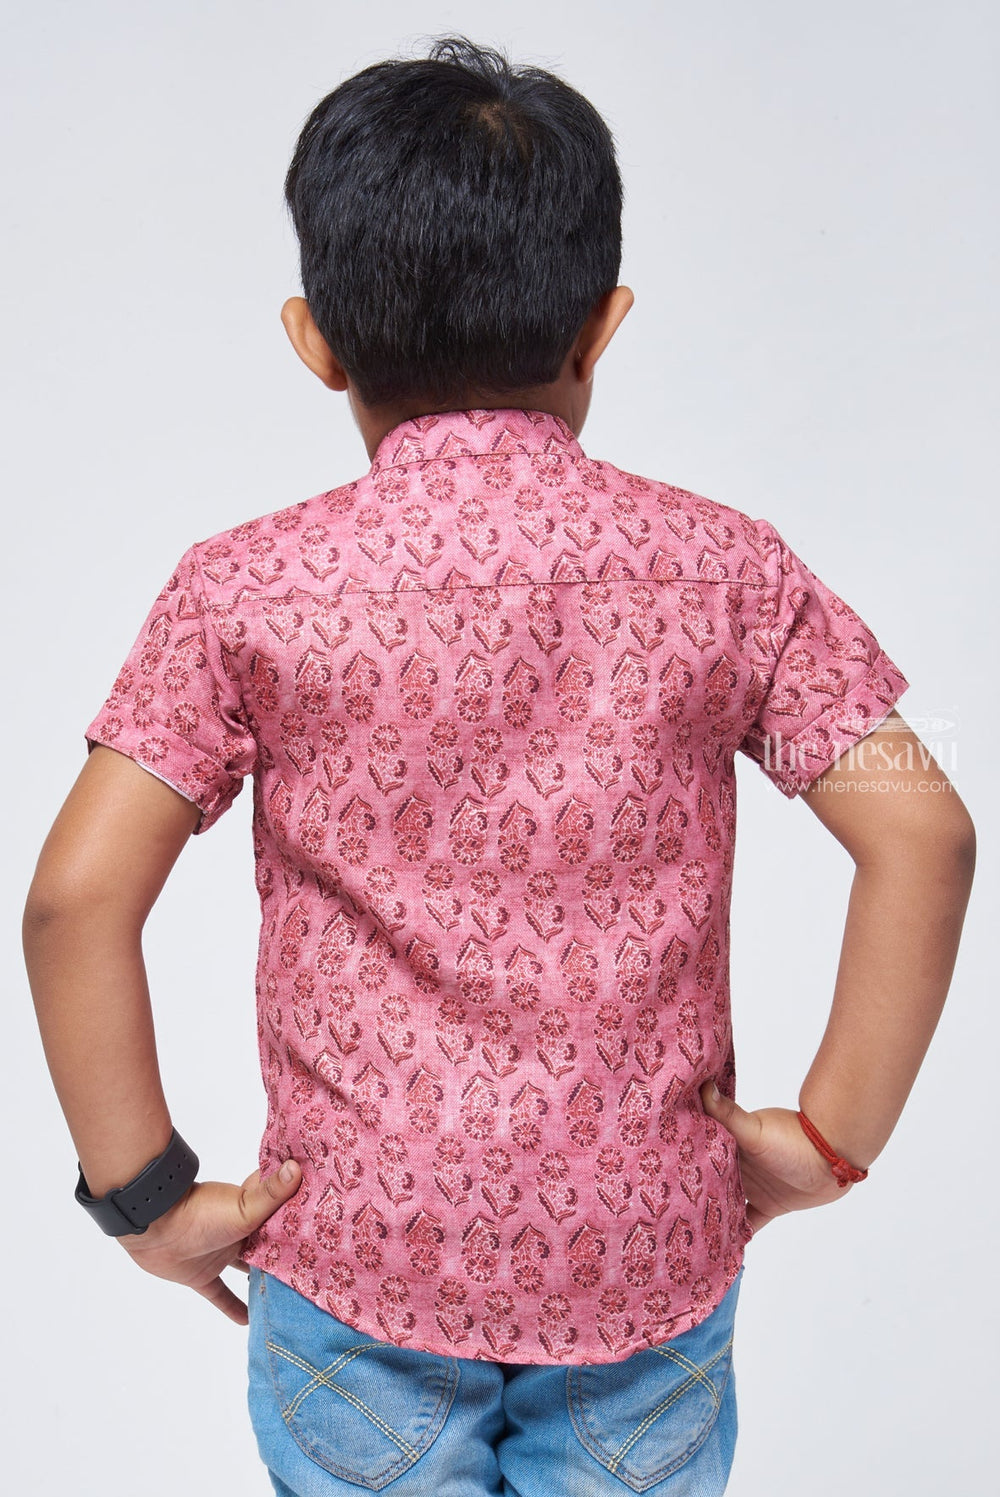 The Nesavu Boys Linen Shirt Cultural Essence: Linen Boys' Shirt with Handcrafted Traditional Indie Prints for Authenticity Nesavu Handcrafted Traditional Indie Print Shirt | Boys Printed Shirt | The Nesavu